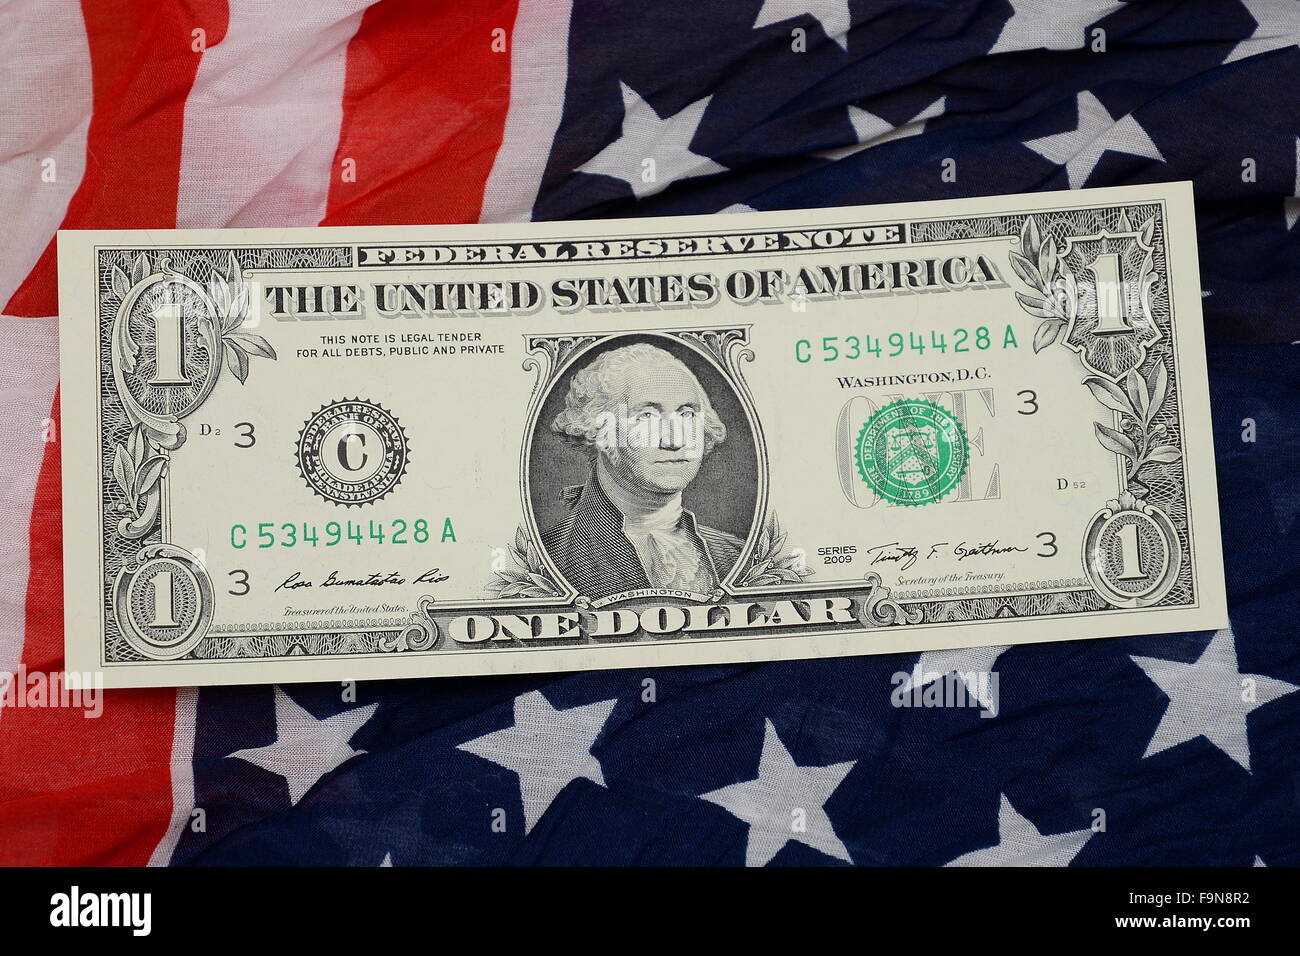 US dolar and flag of USA Stock Photo